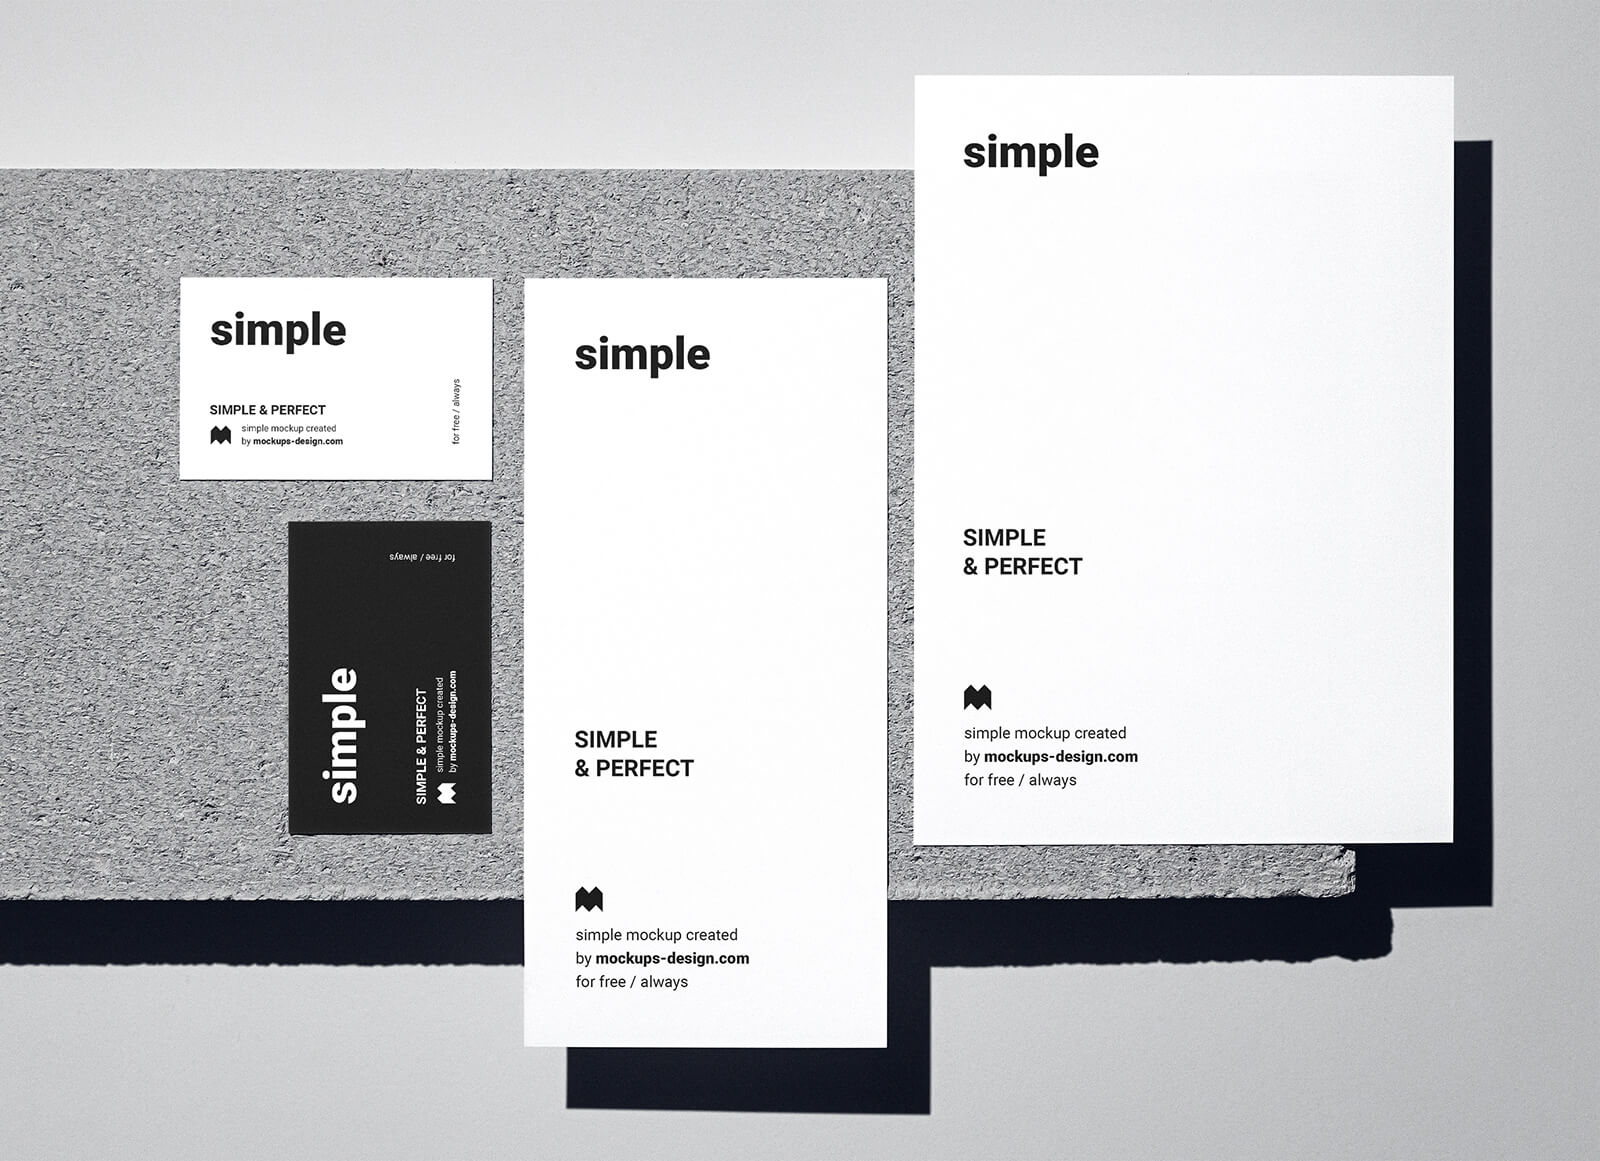 Maqueta de papelería simplista